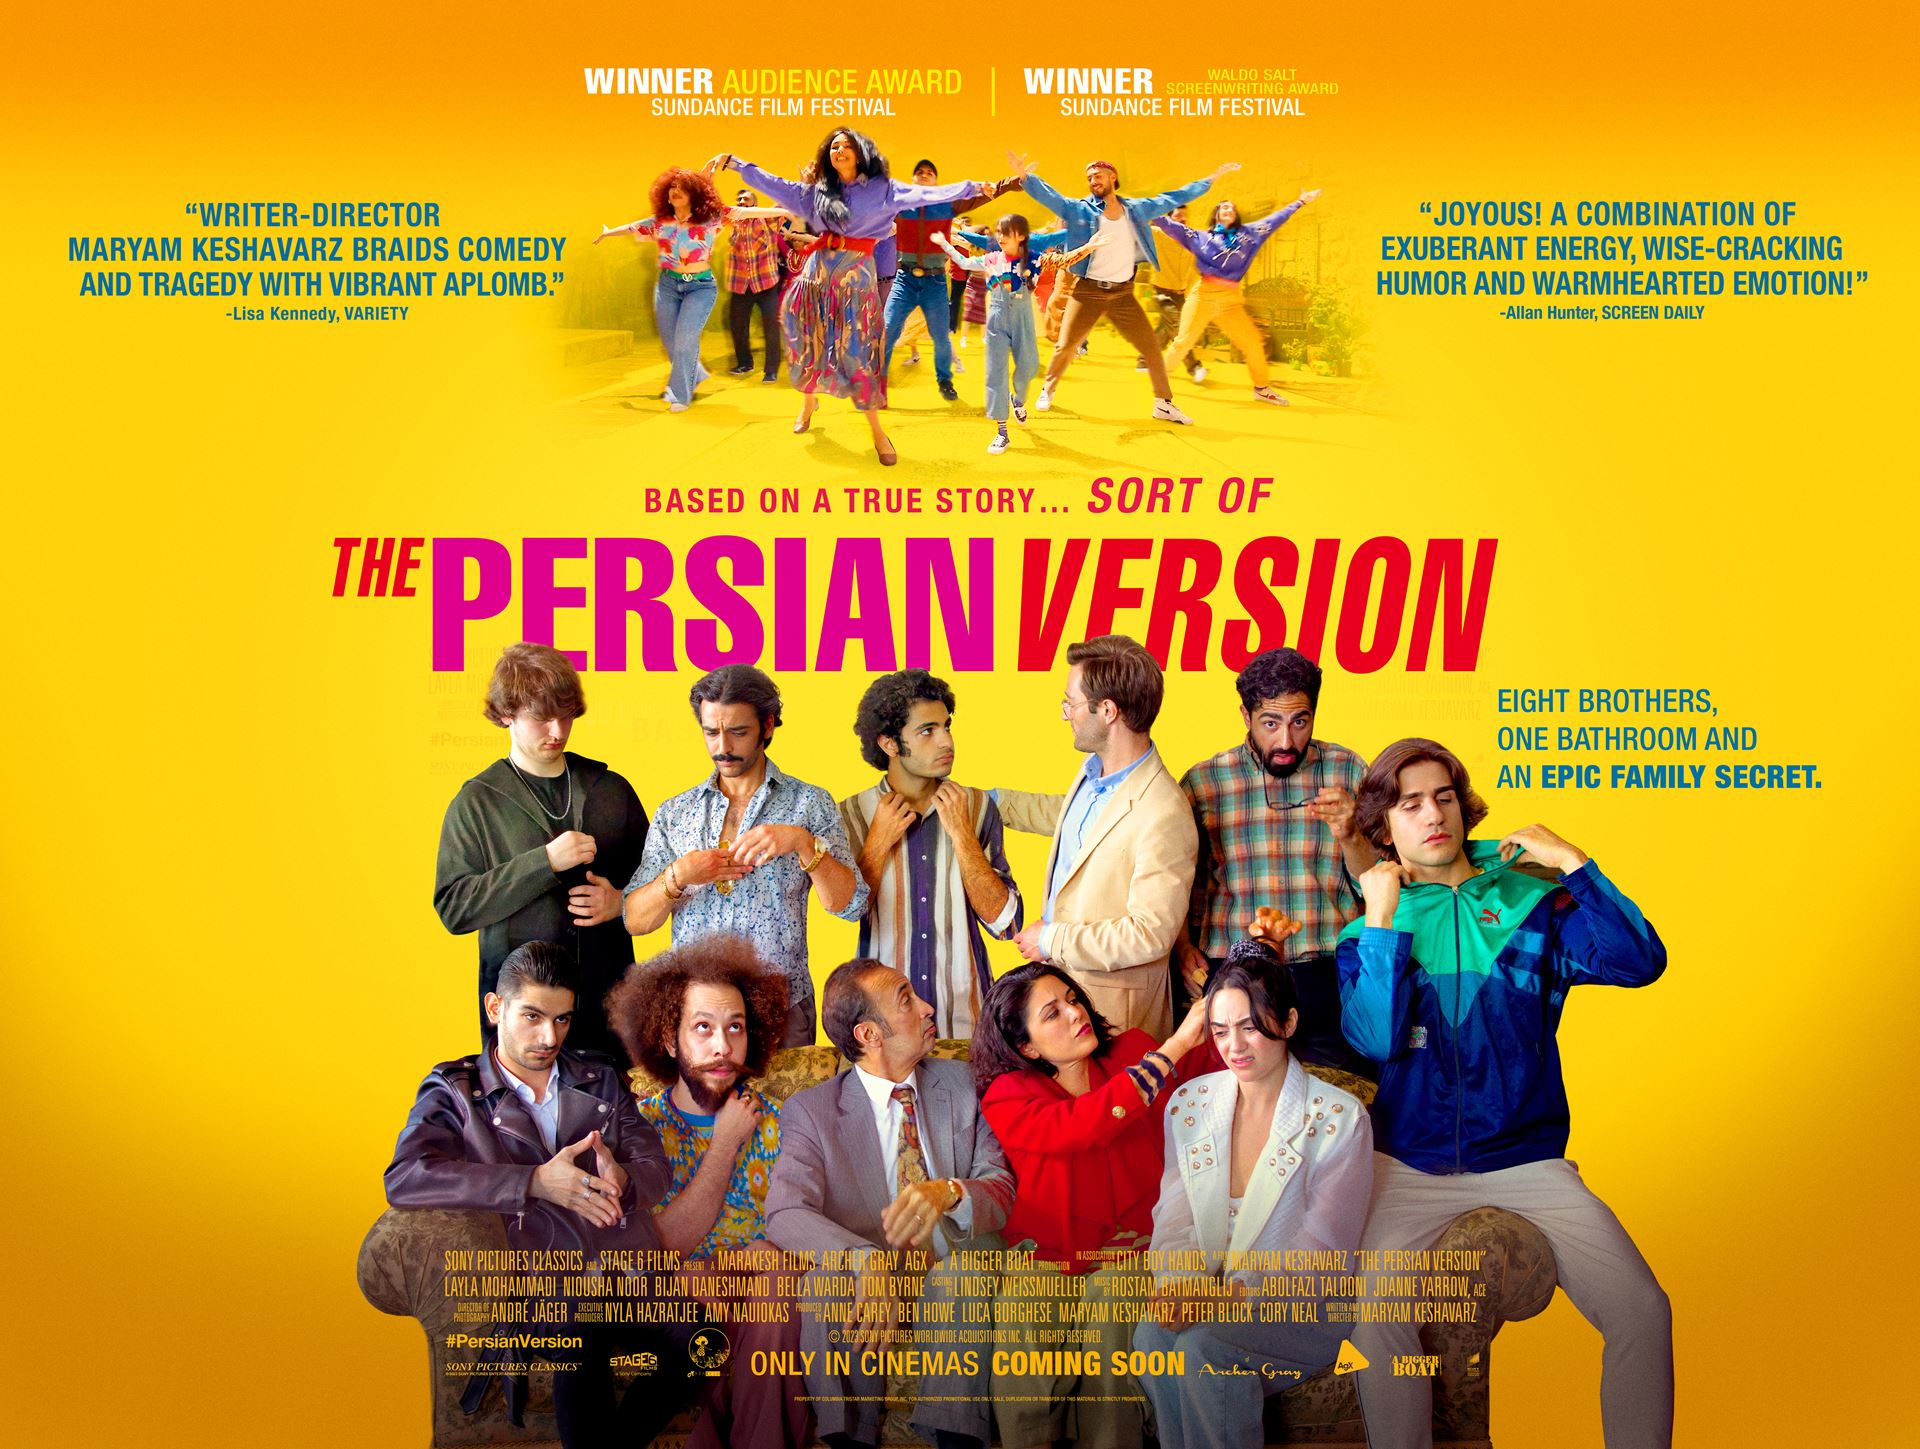 The Persian Version